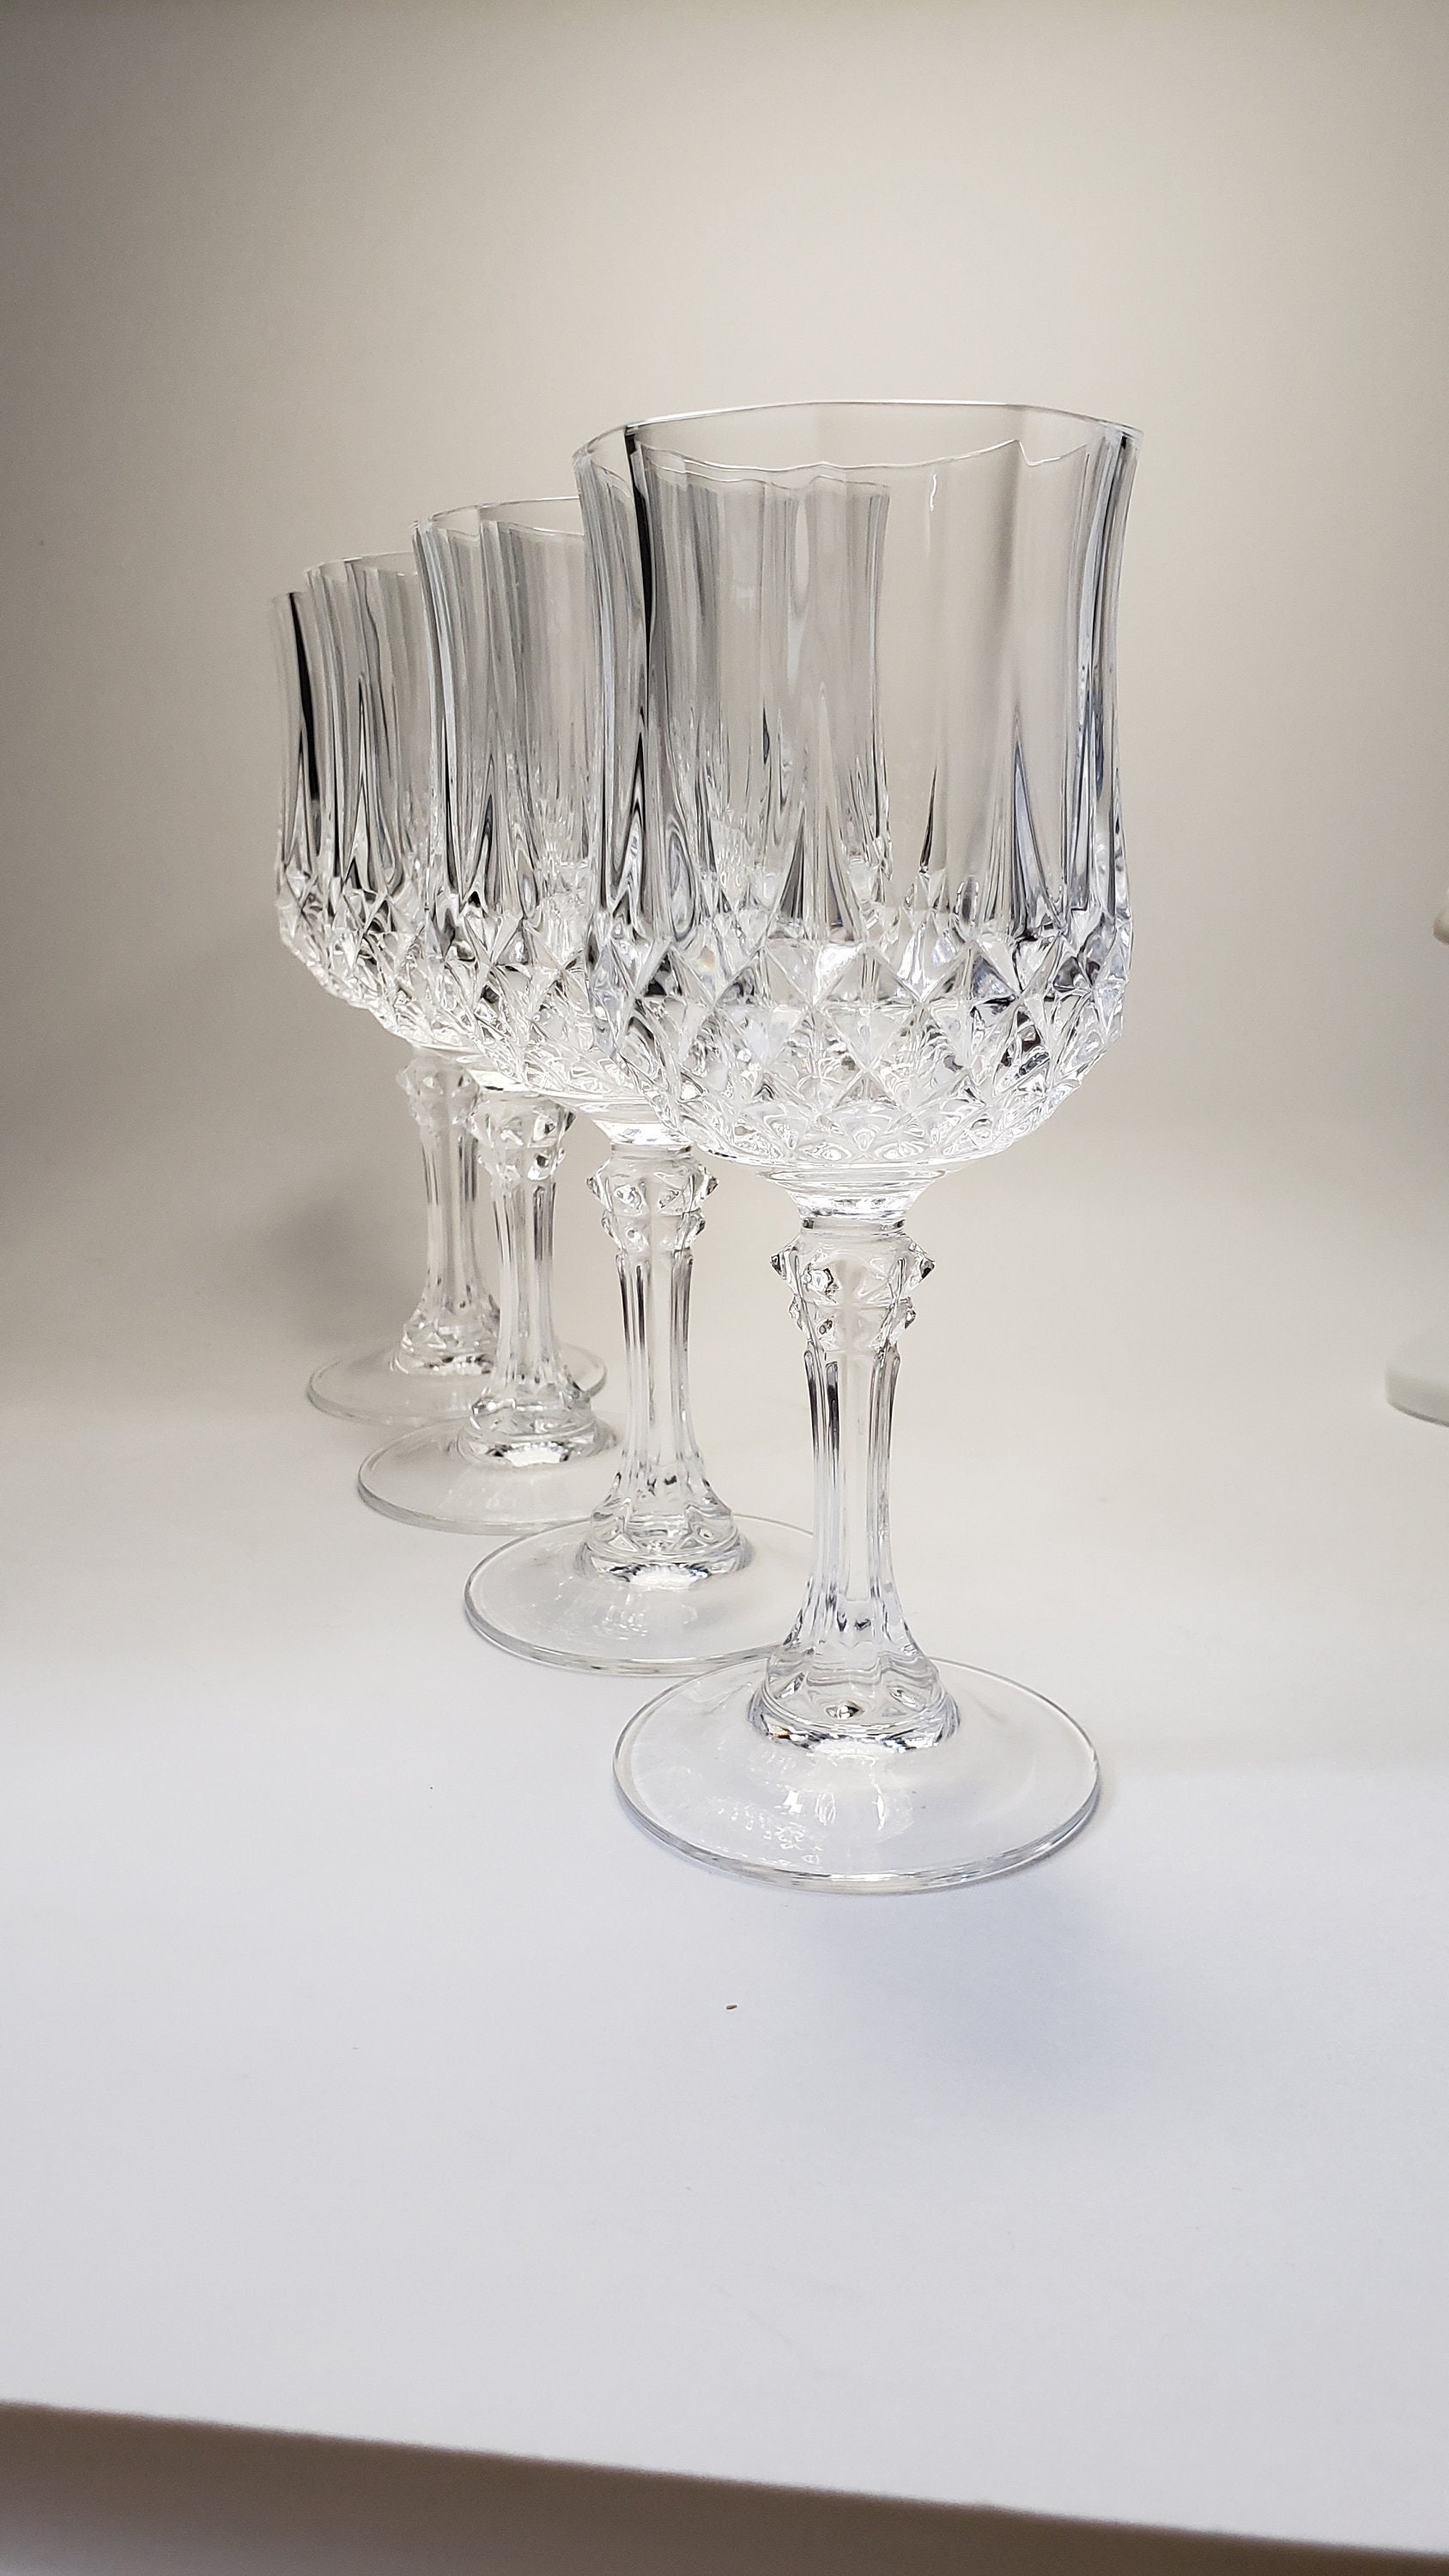 Genuine lead crystal 4 longchamp glasses (wine glasses) by Crystal